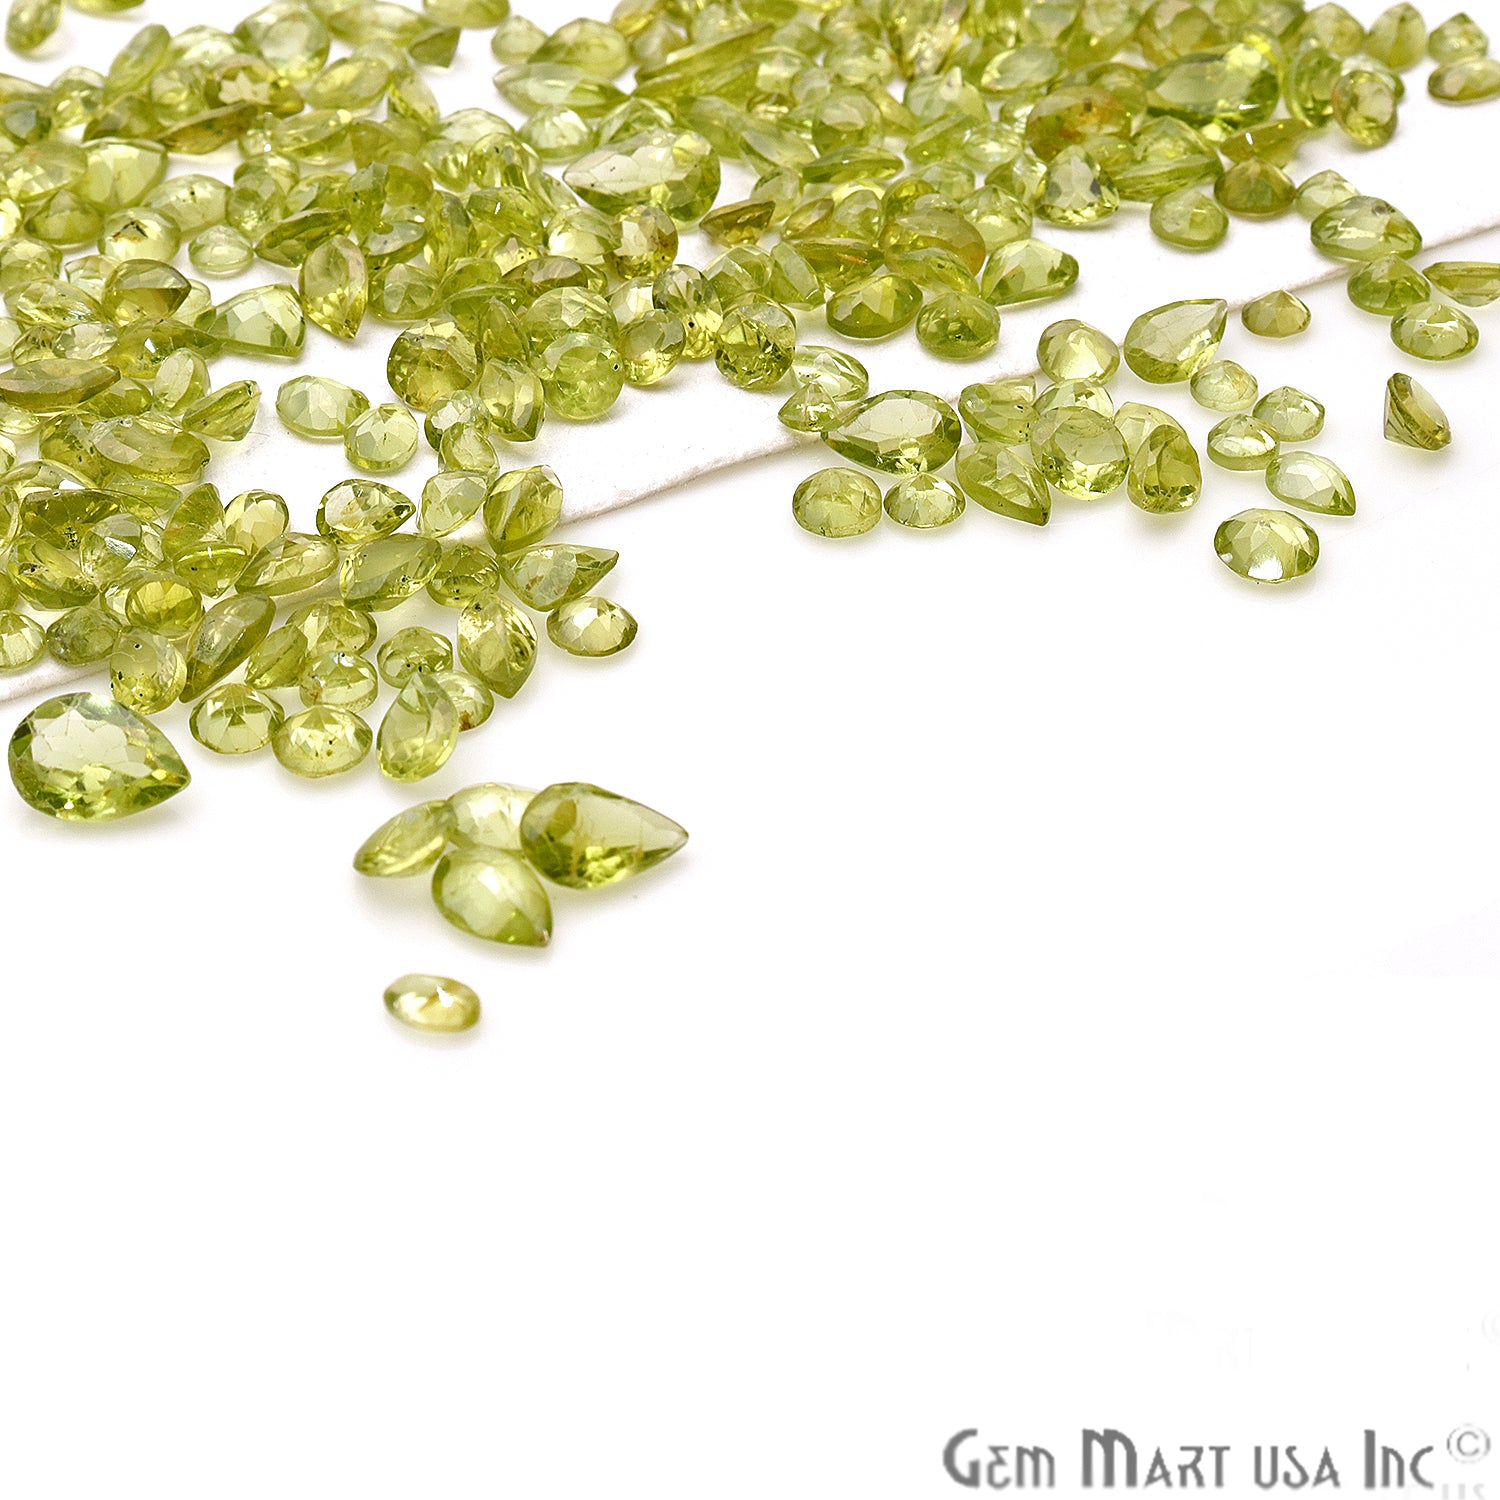 Peridot Mix Shape Wholesale Loose Gemstones (Pick Your Carat) - GemMartUSA